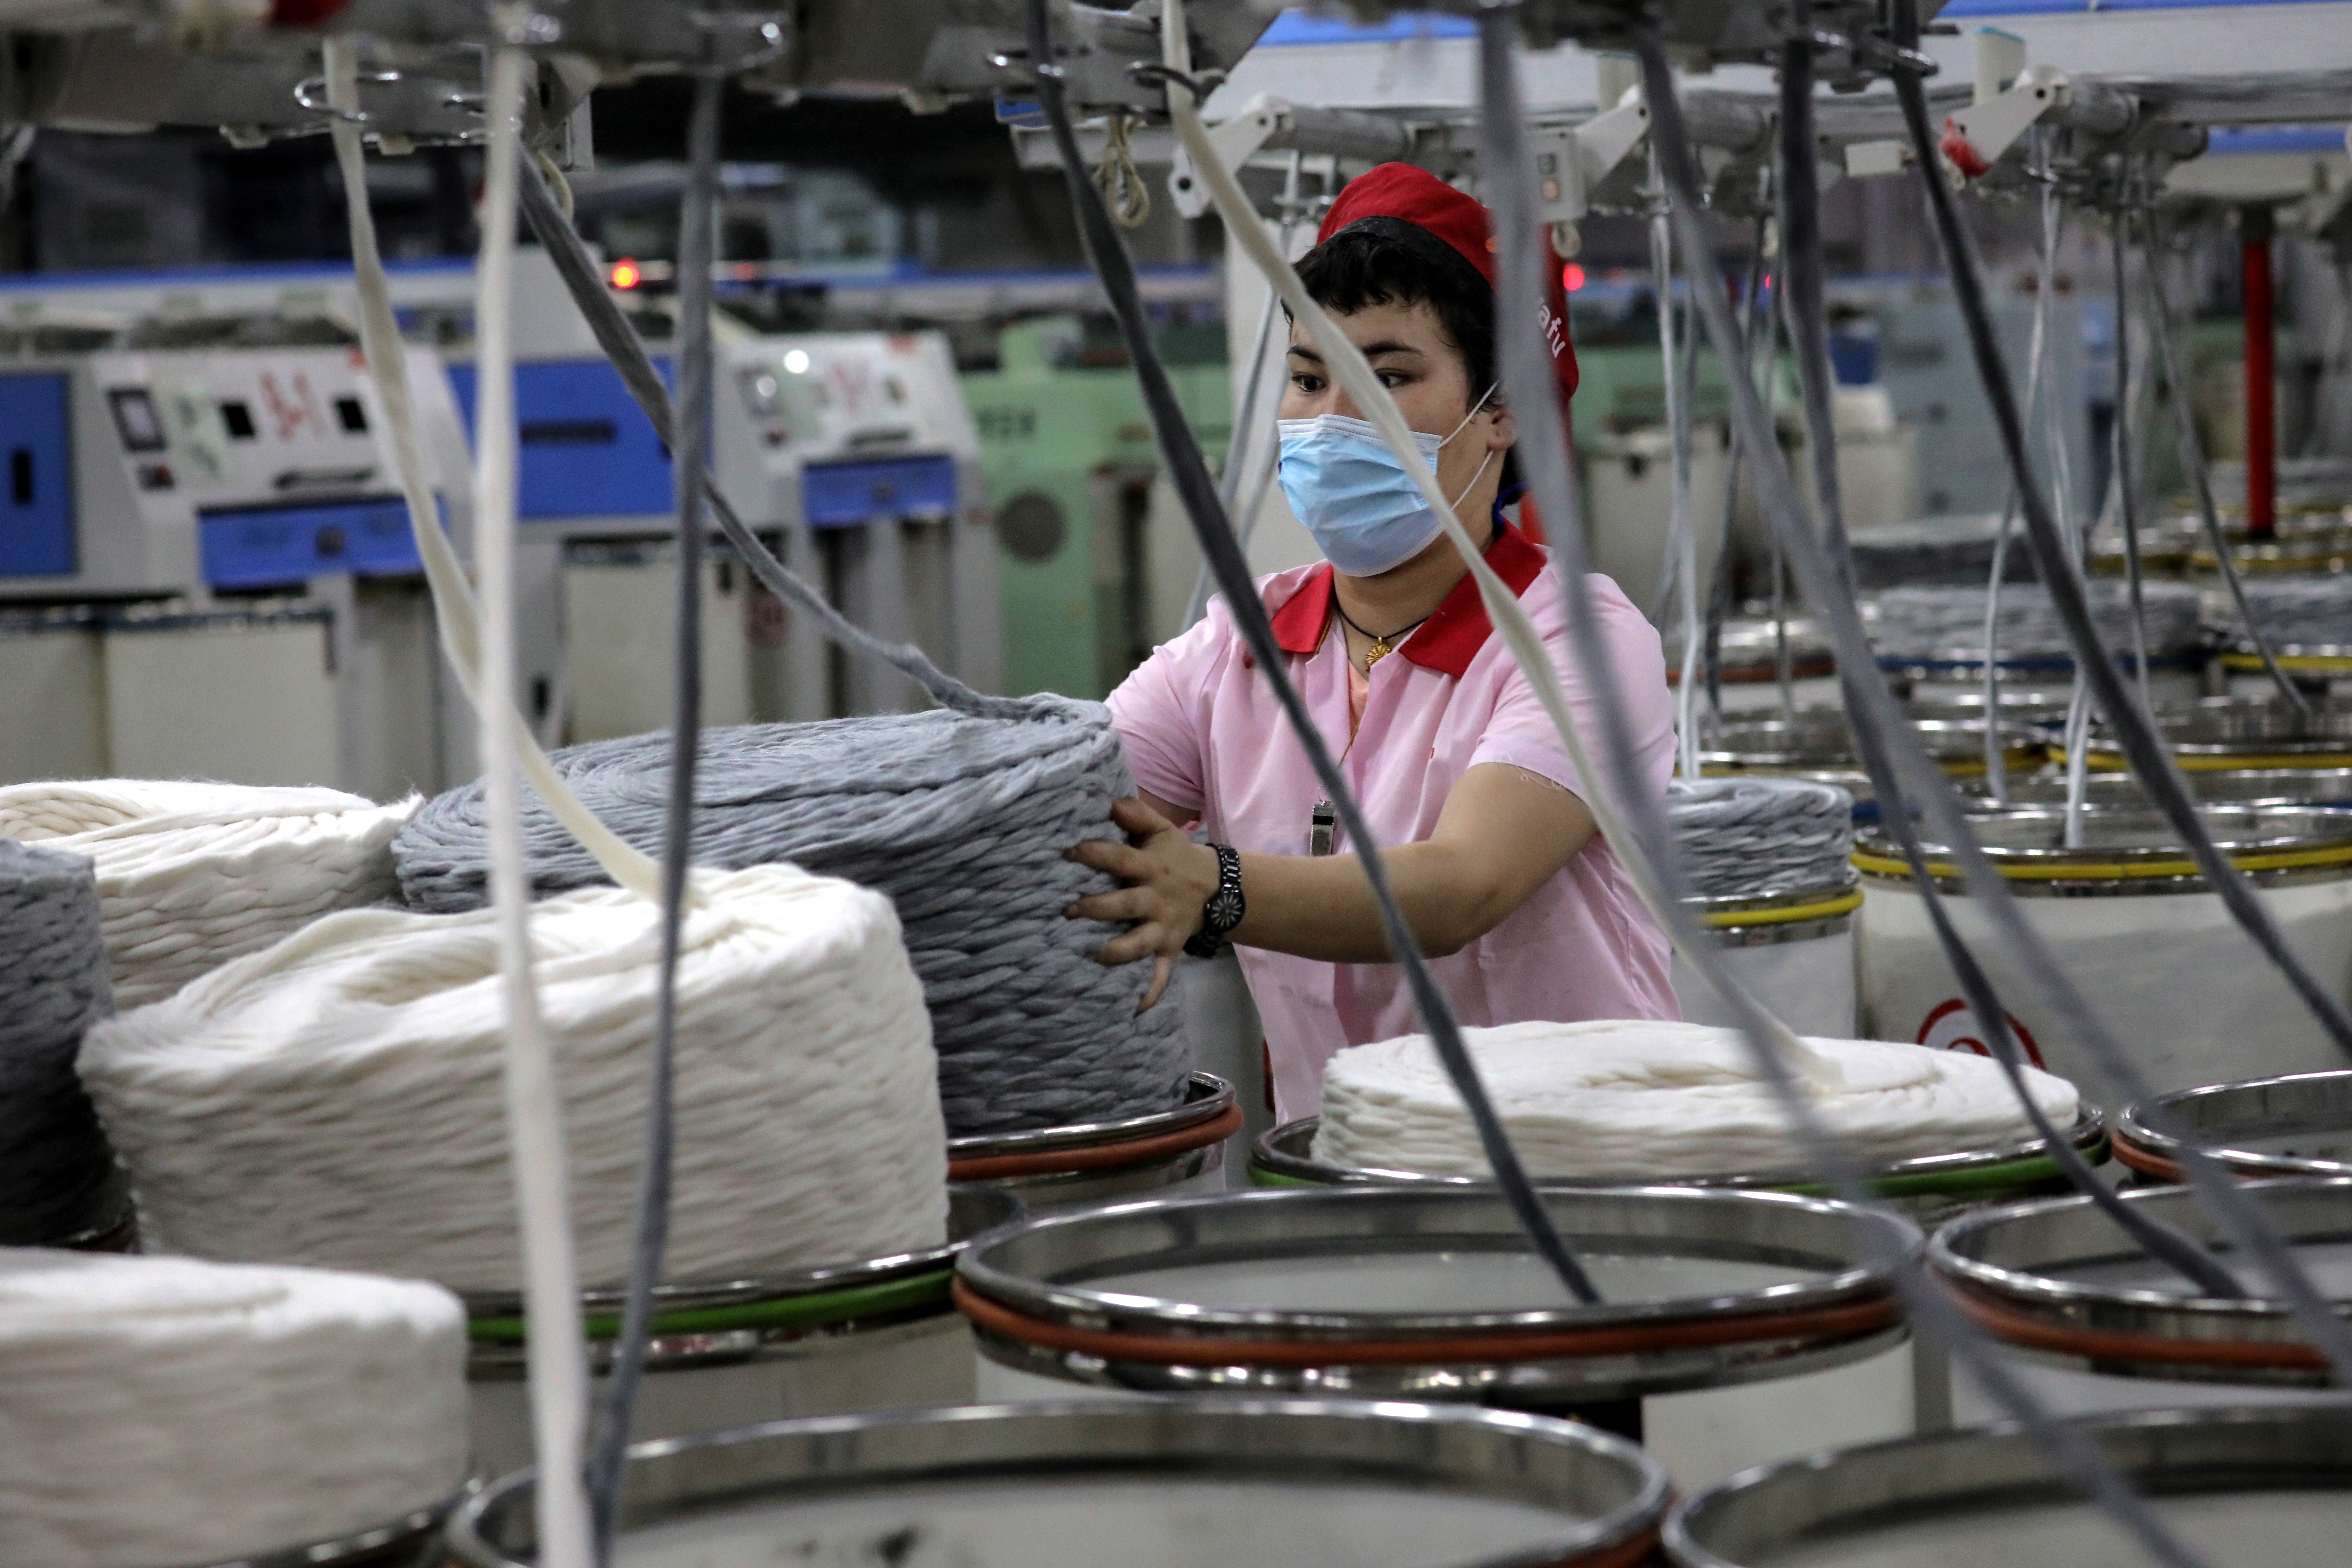 File: An ethnic minority worker operates cotton yarn machinery at Aksu Huafu textile limited company in Aksu, western China's Xinjiang Uyghur Autonomous Region